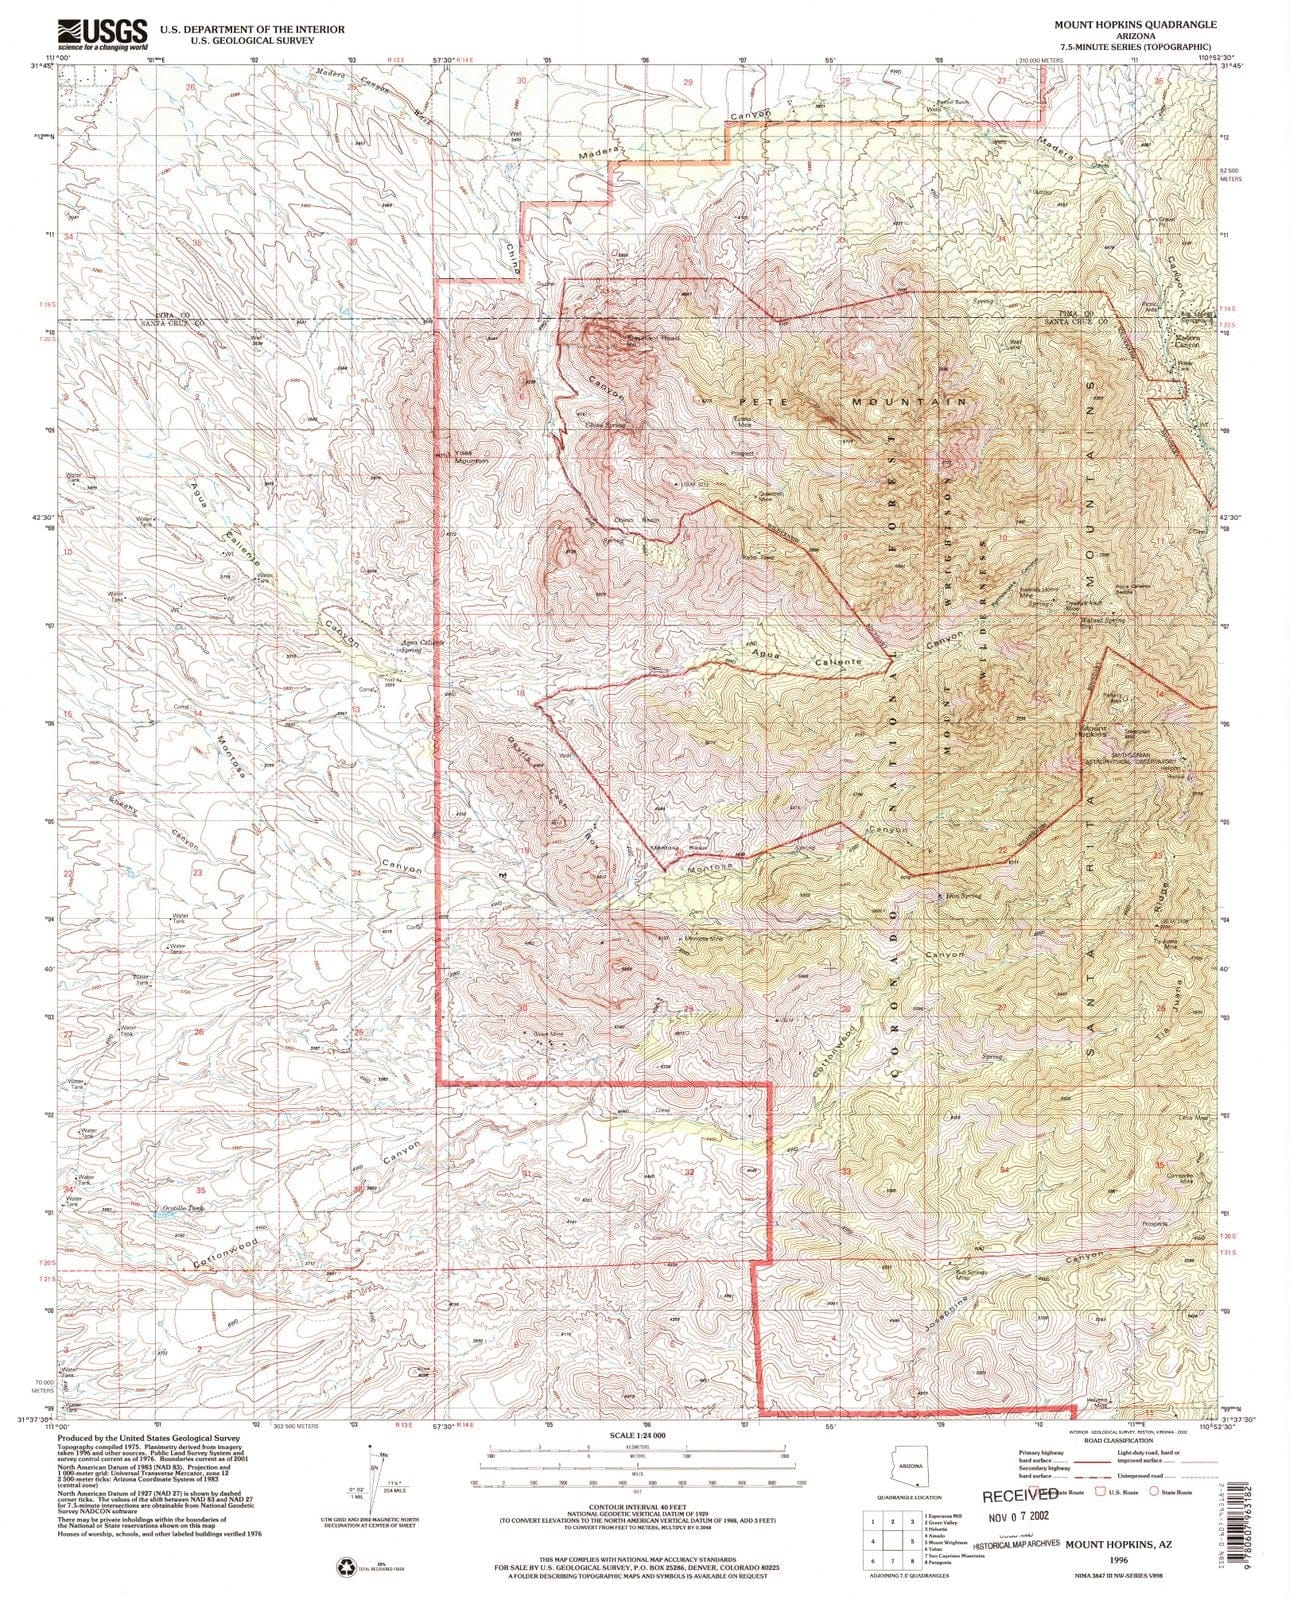 1996 Mount Hopkins, AZ - Arizona - USGS Topographic Map